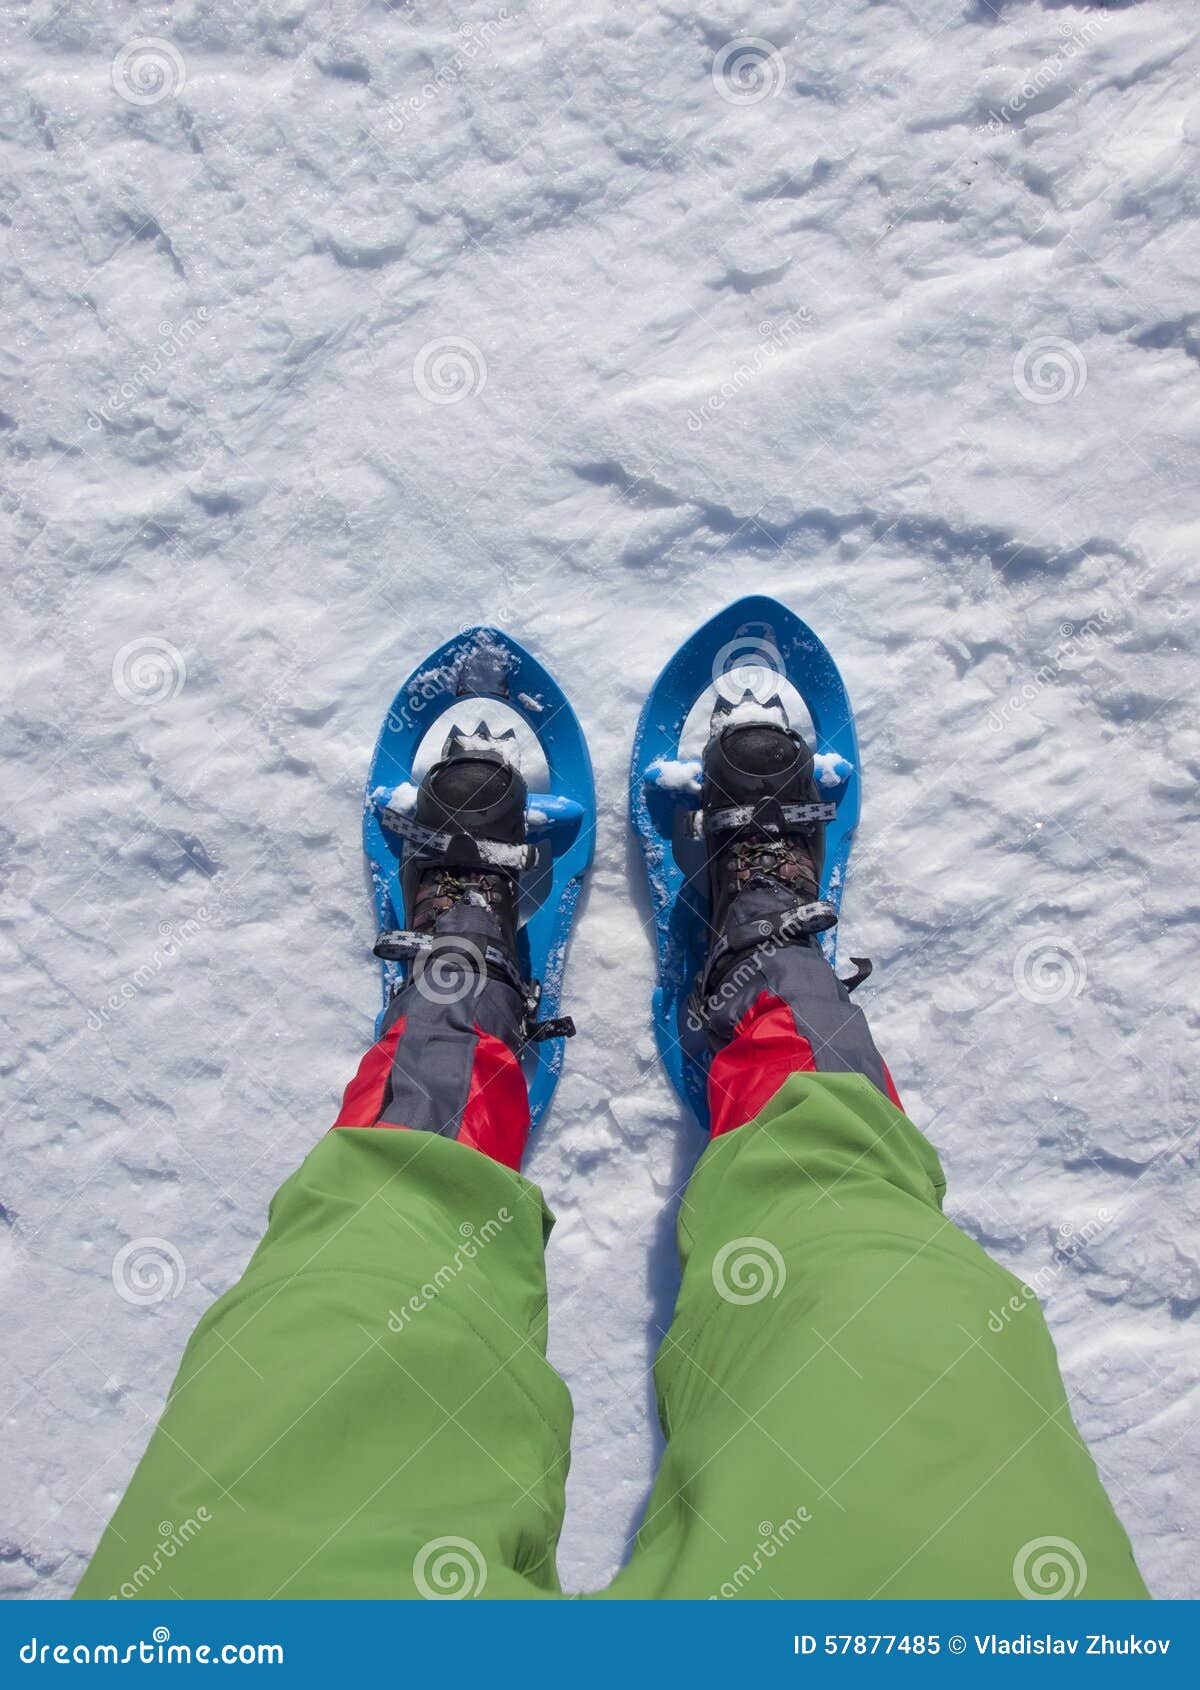 sapato para andar na neve